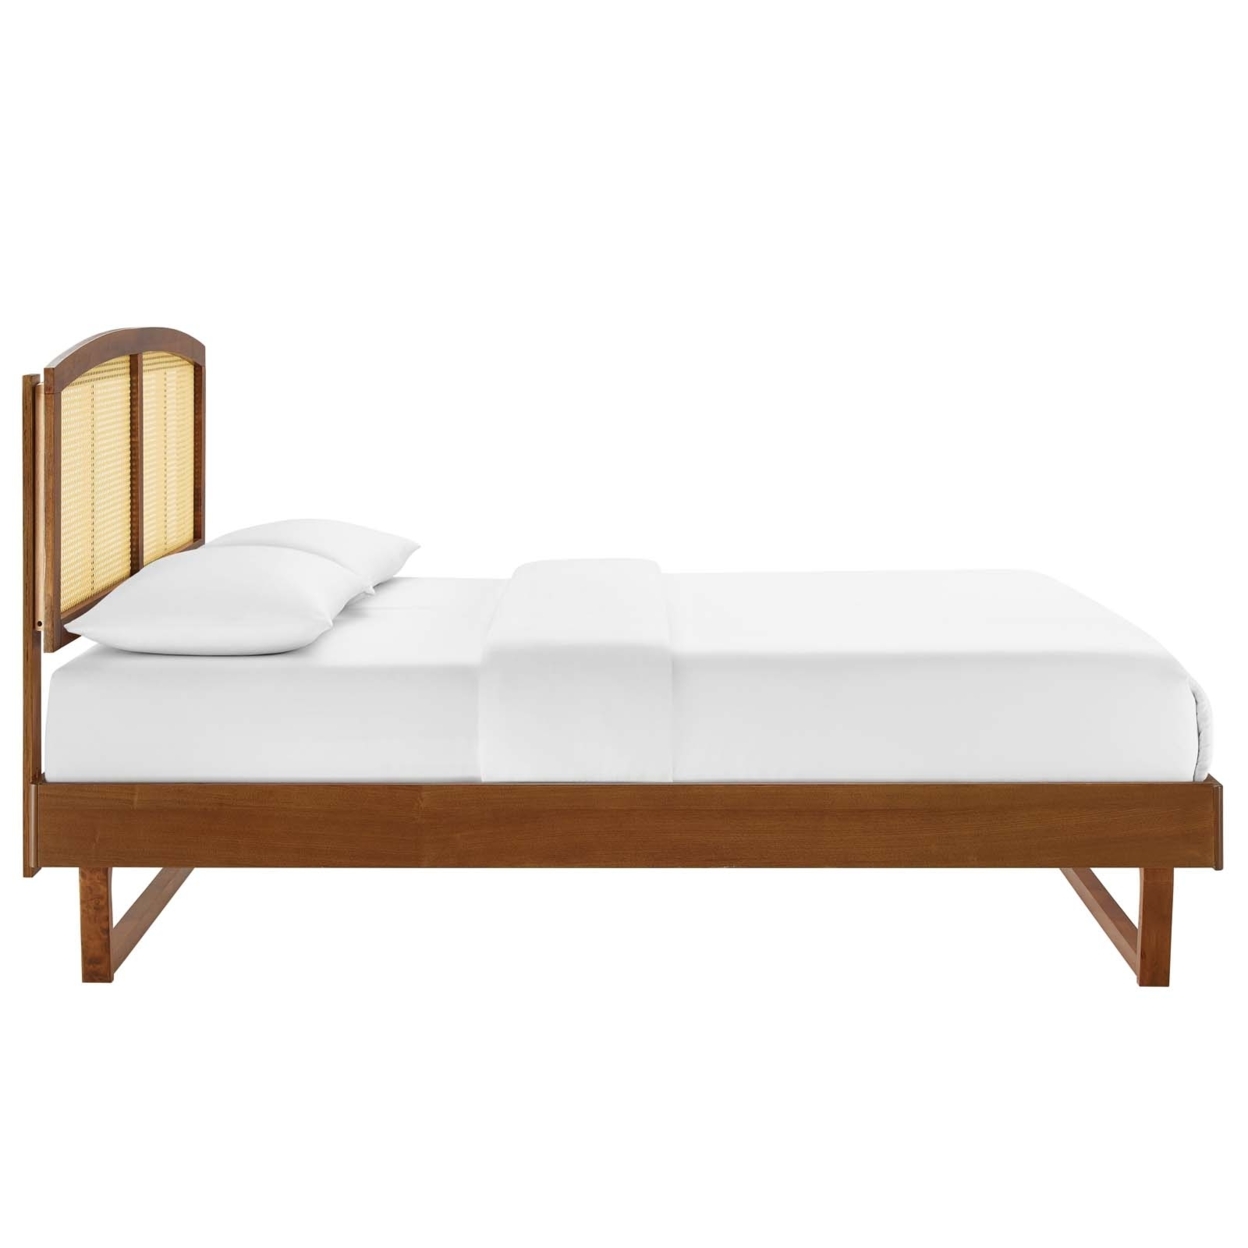 Sierra Cane And Wood Full Platform Bed With Angular Legs, Walnut